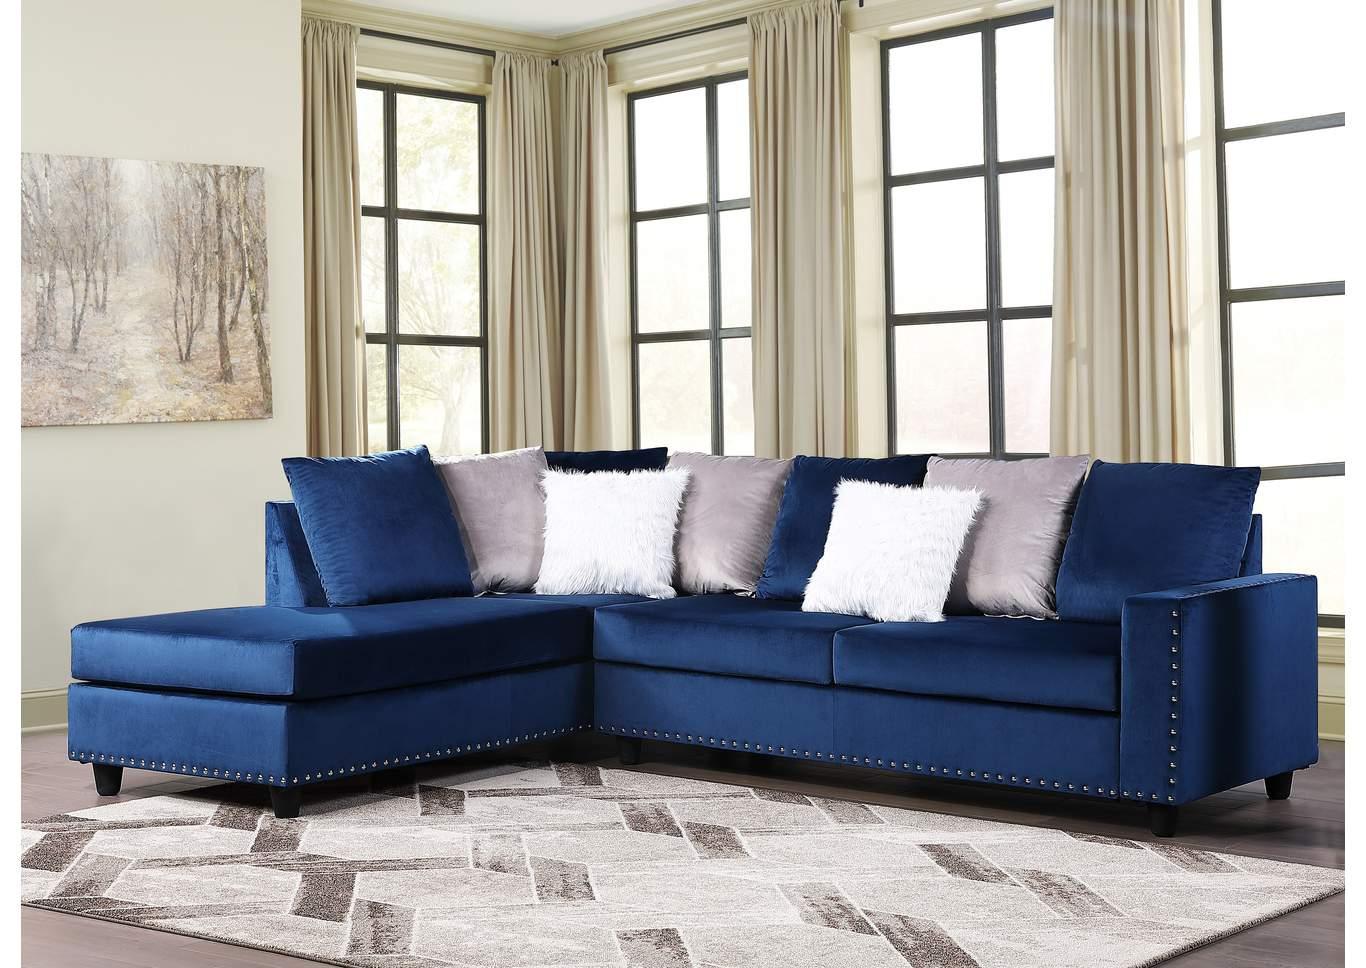 

    
Galaxy Home Furniture MARTHA Sectional Sofa Navy GHF-808857614056
